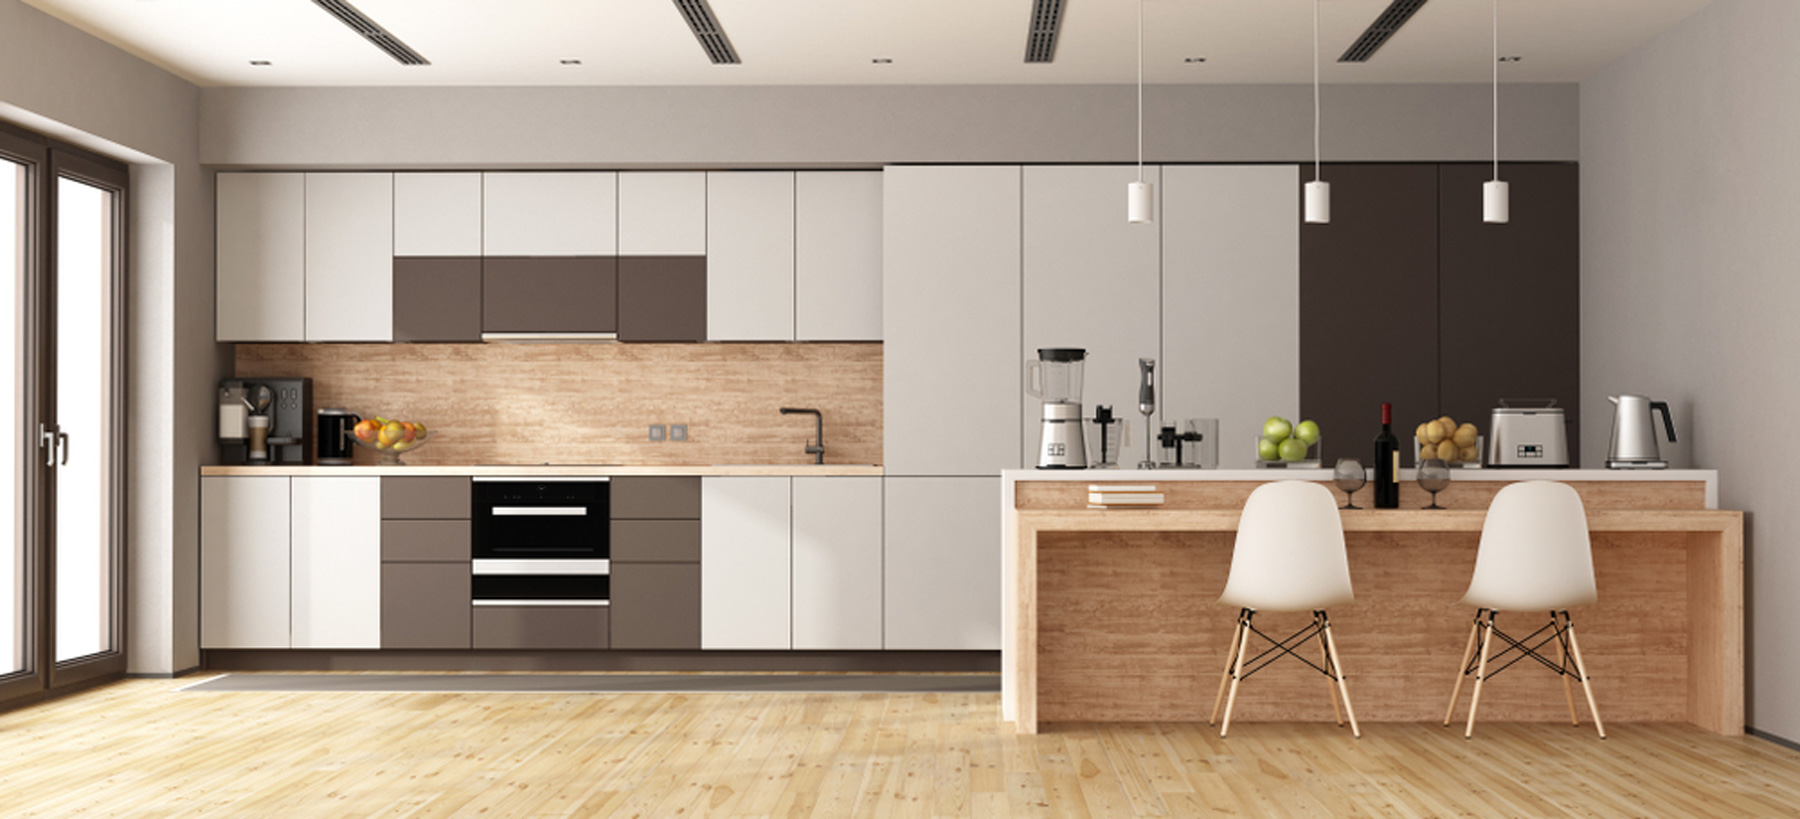 Stylish kitchen renovation ideas